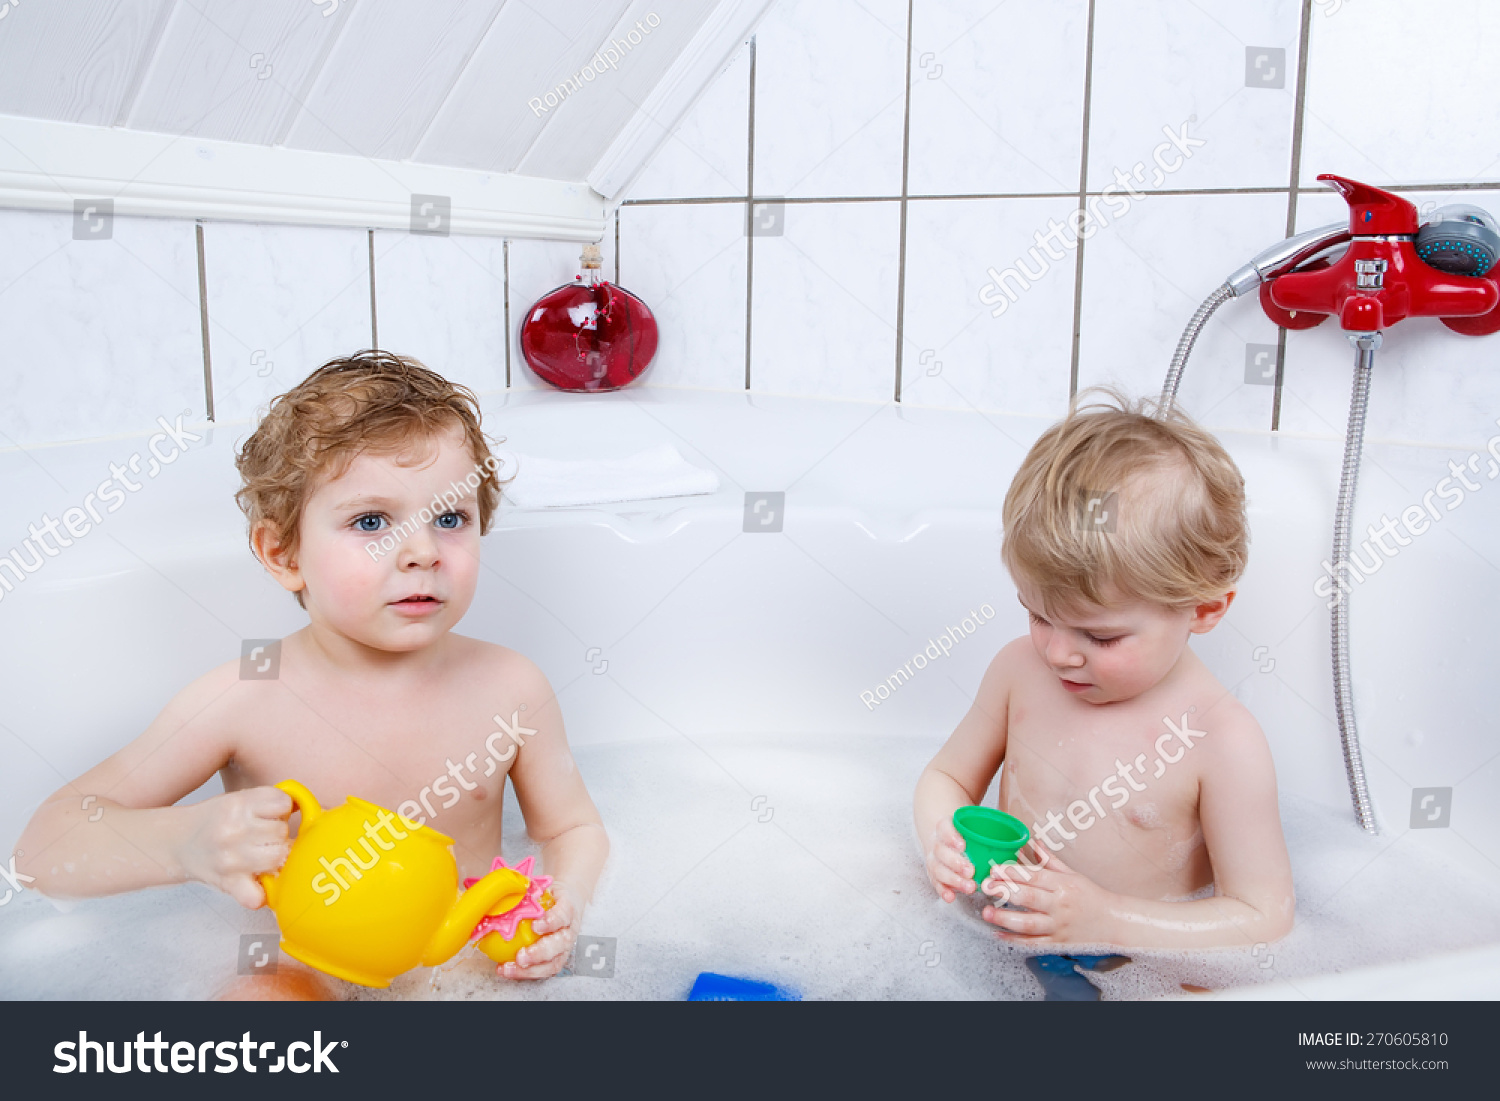 Two Little Friends Boys Having Fun With Water By Taking Bath In Bathtub